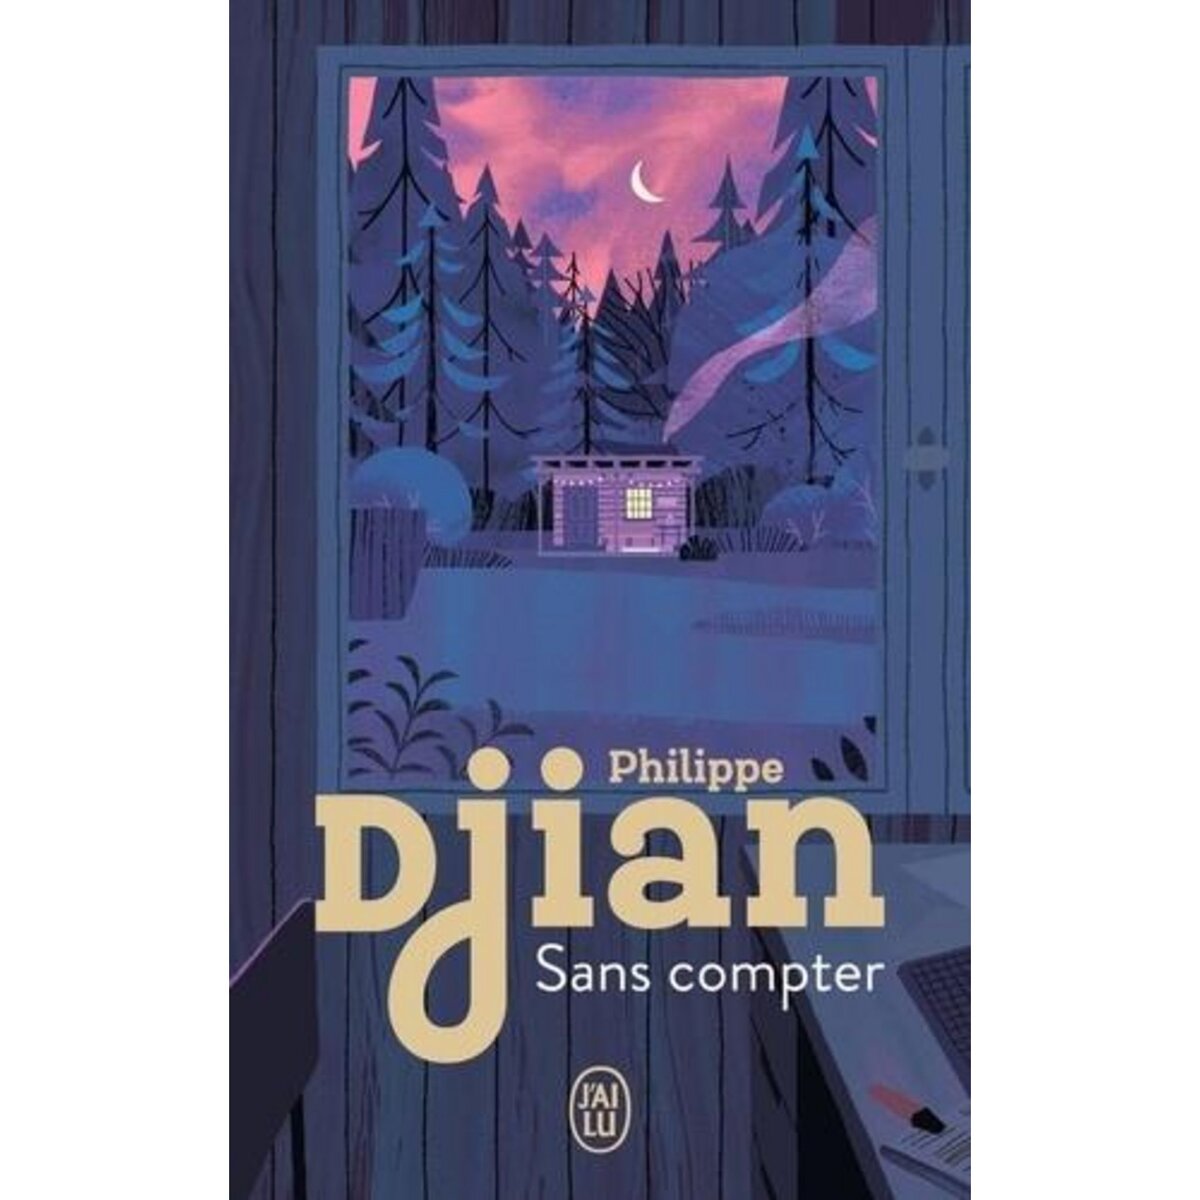  SANS COMPTER, Djian Philippe